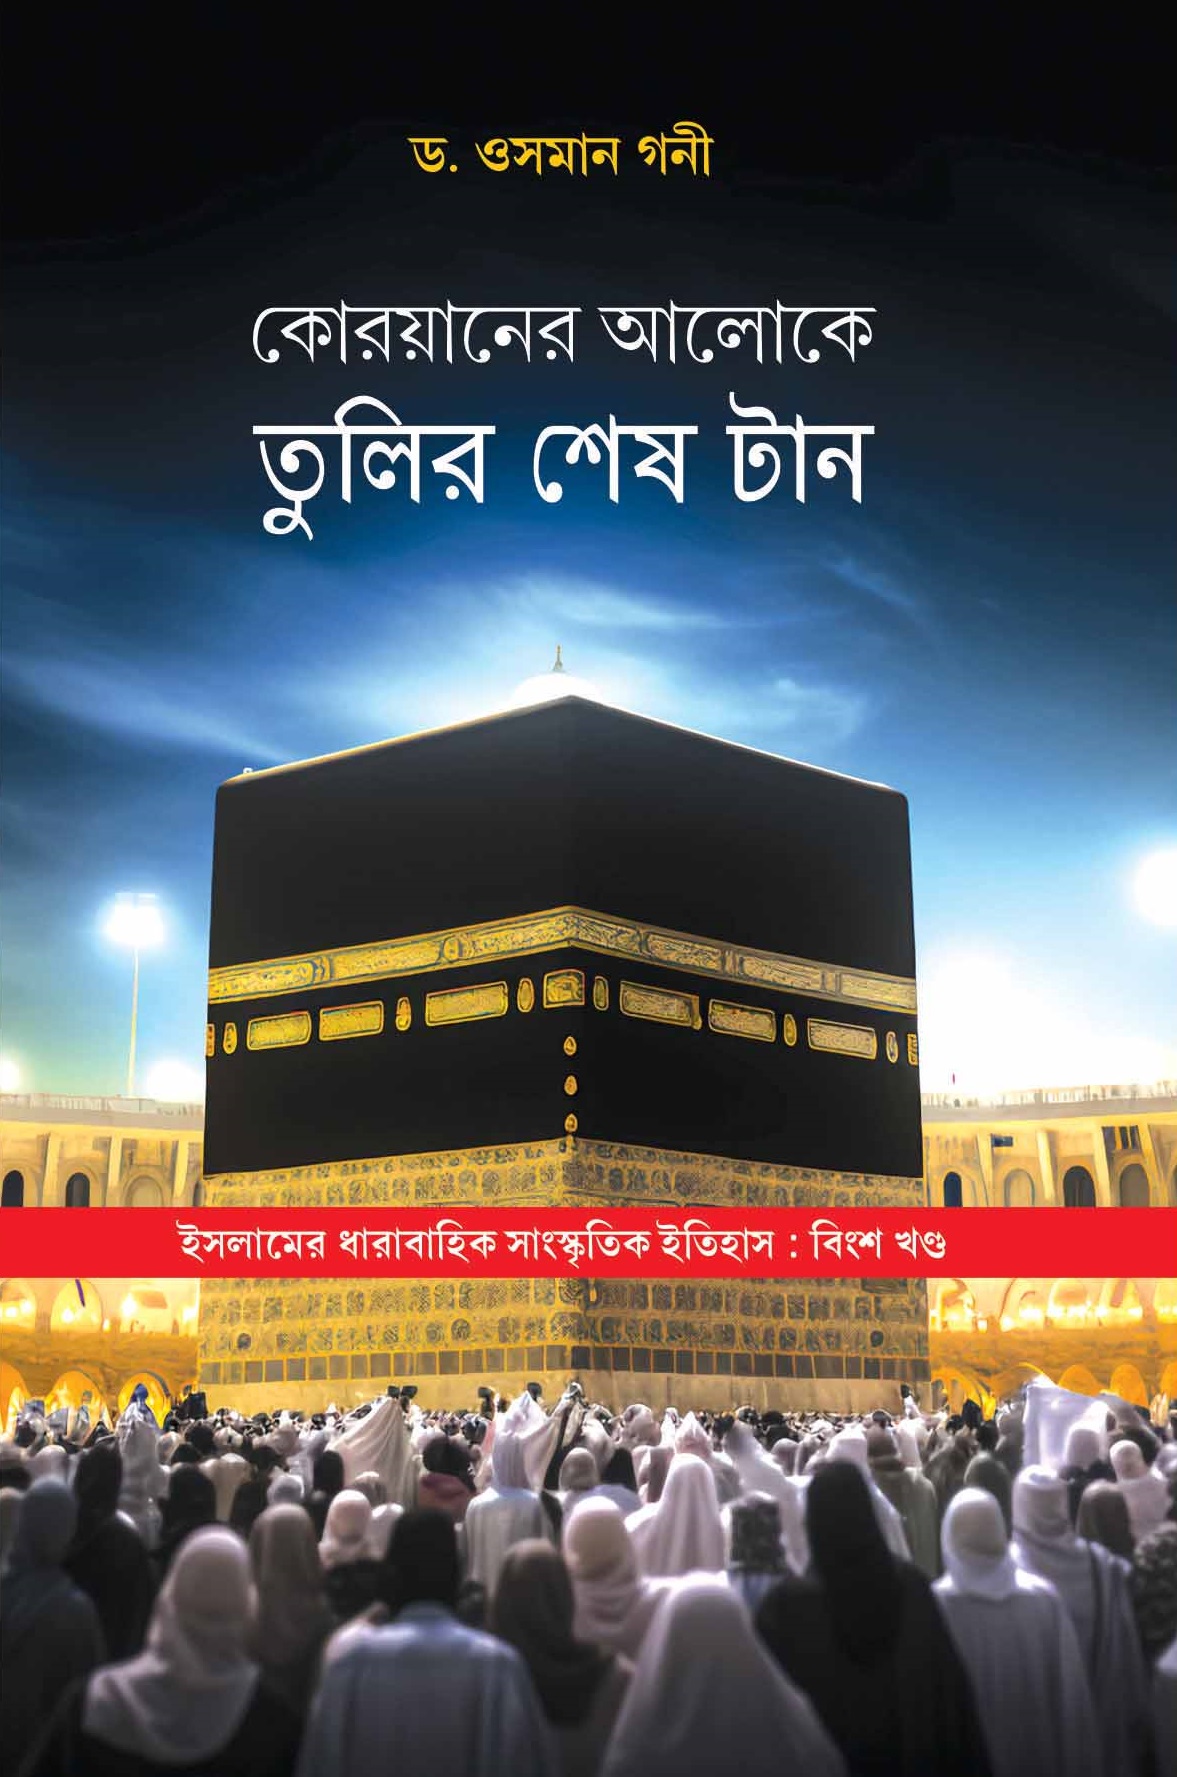 Quraner Aloke Tulir Shesh Tan front cover